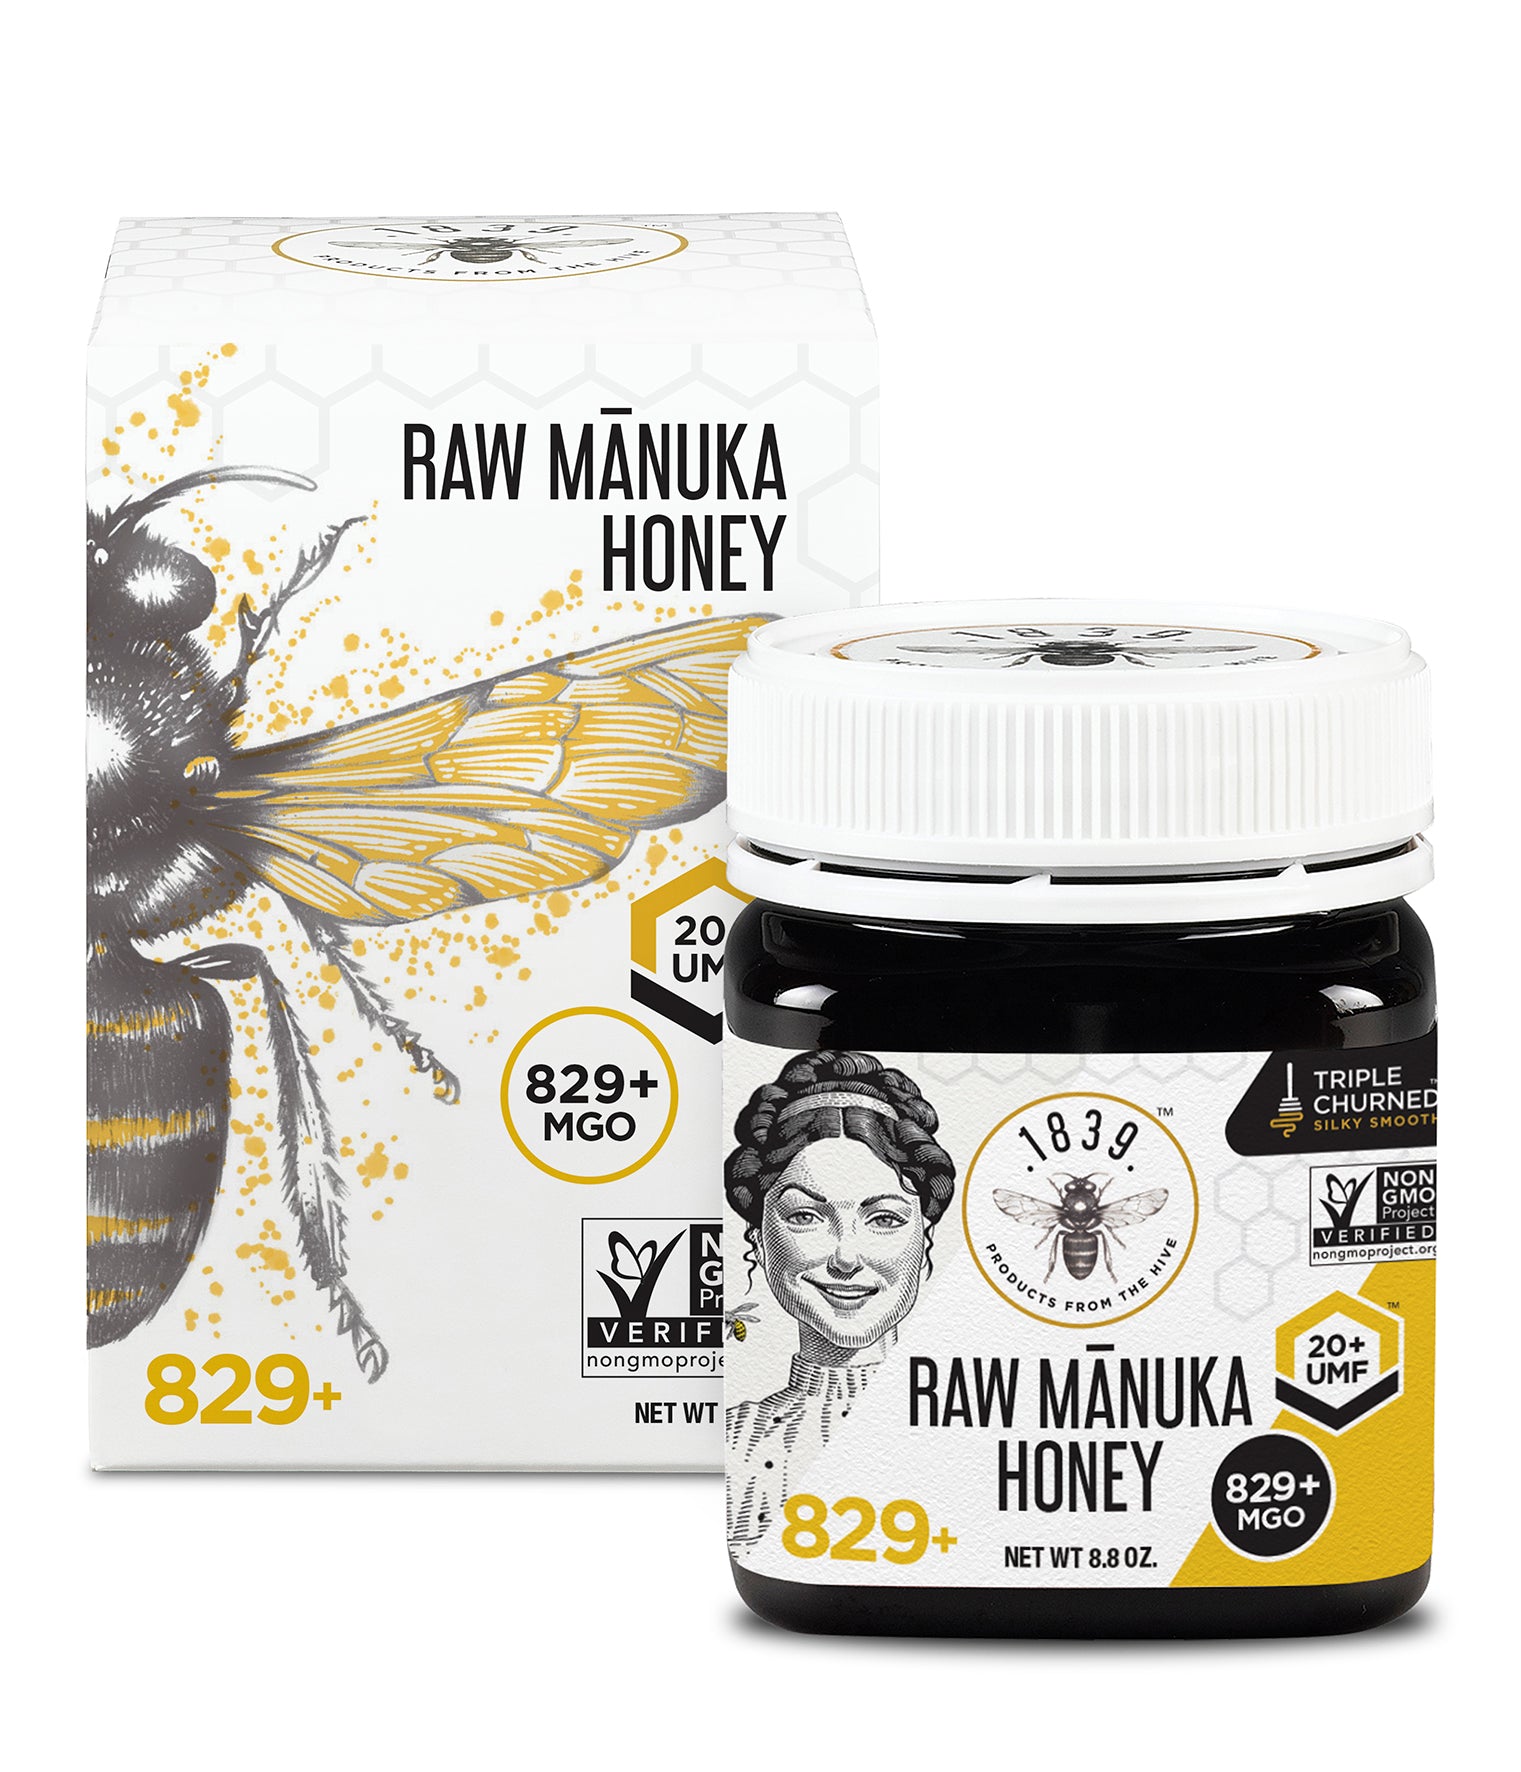 UMF 20+ Manuka Honey Blend (8.8oz)